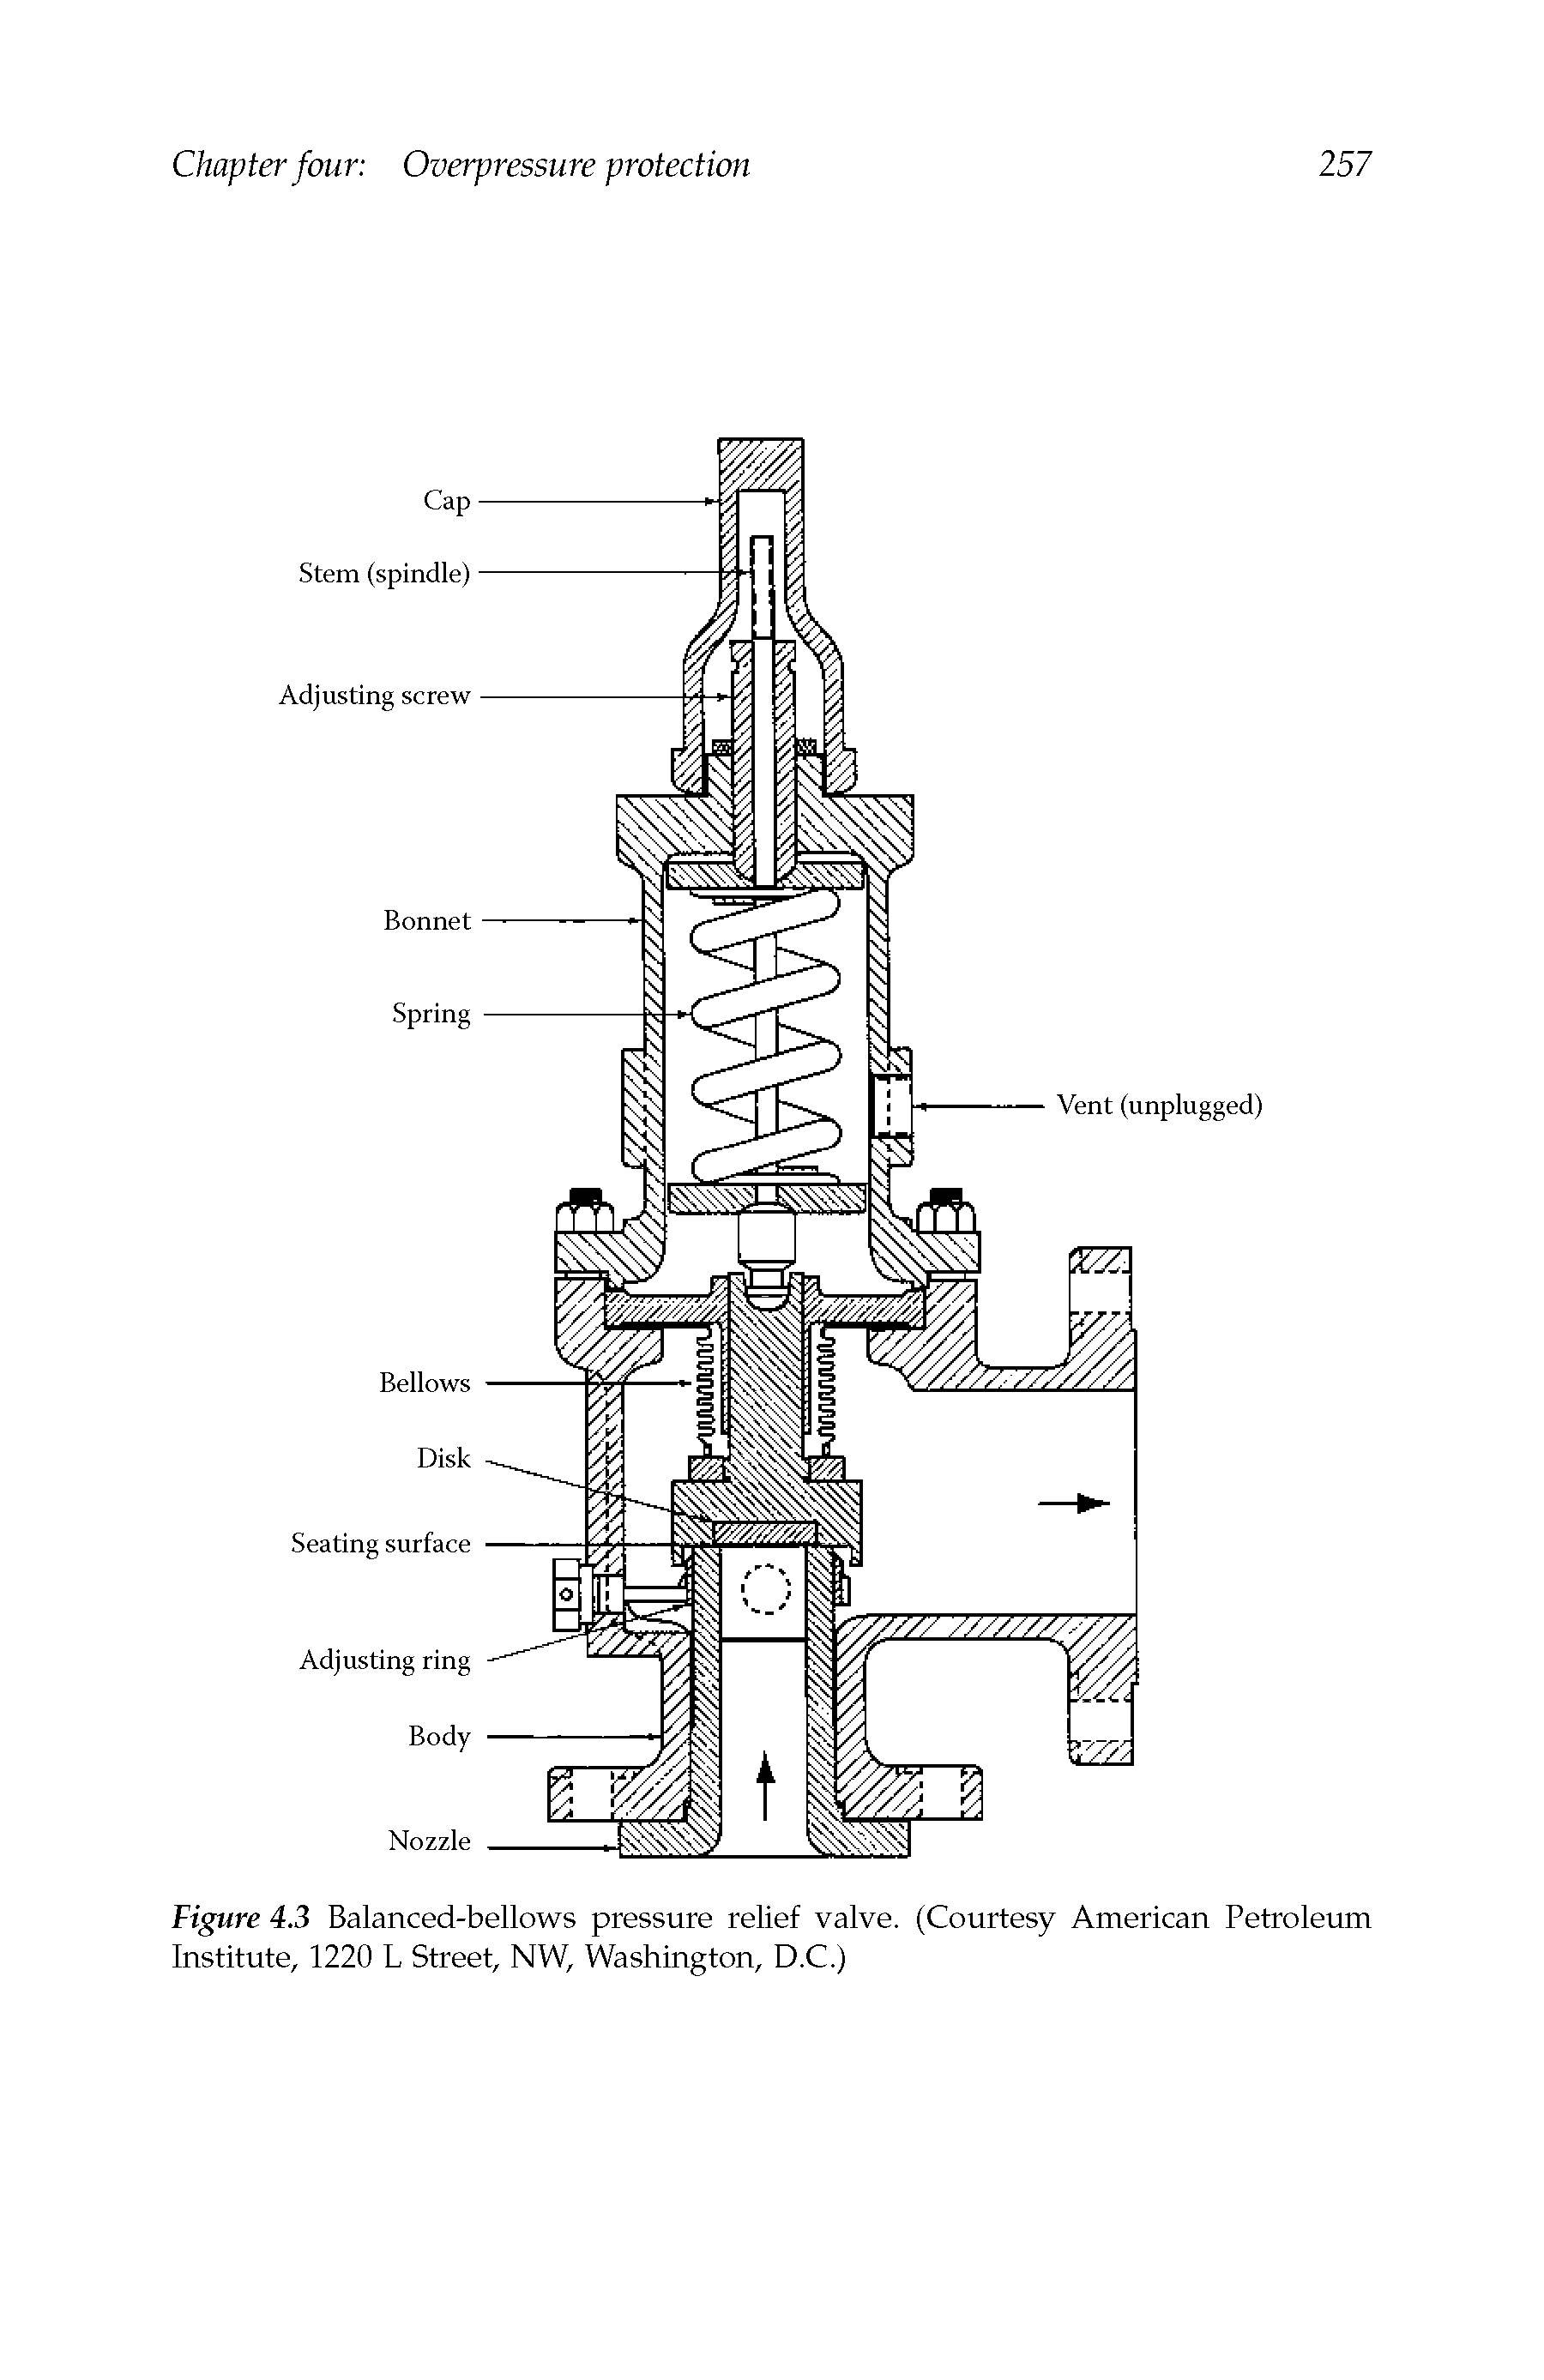 Figure 4.3 Balanced-bellows pressure relief valve. (Courtesy American Petroleum Institute, 1220 L Street, NW, Washington, D.C.)...